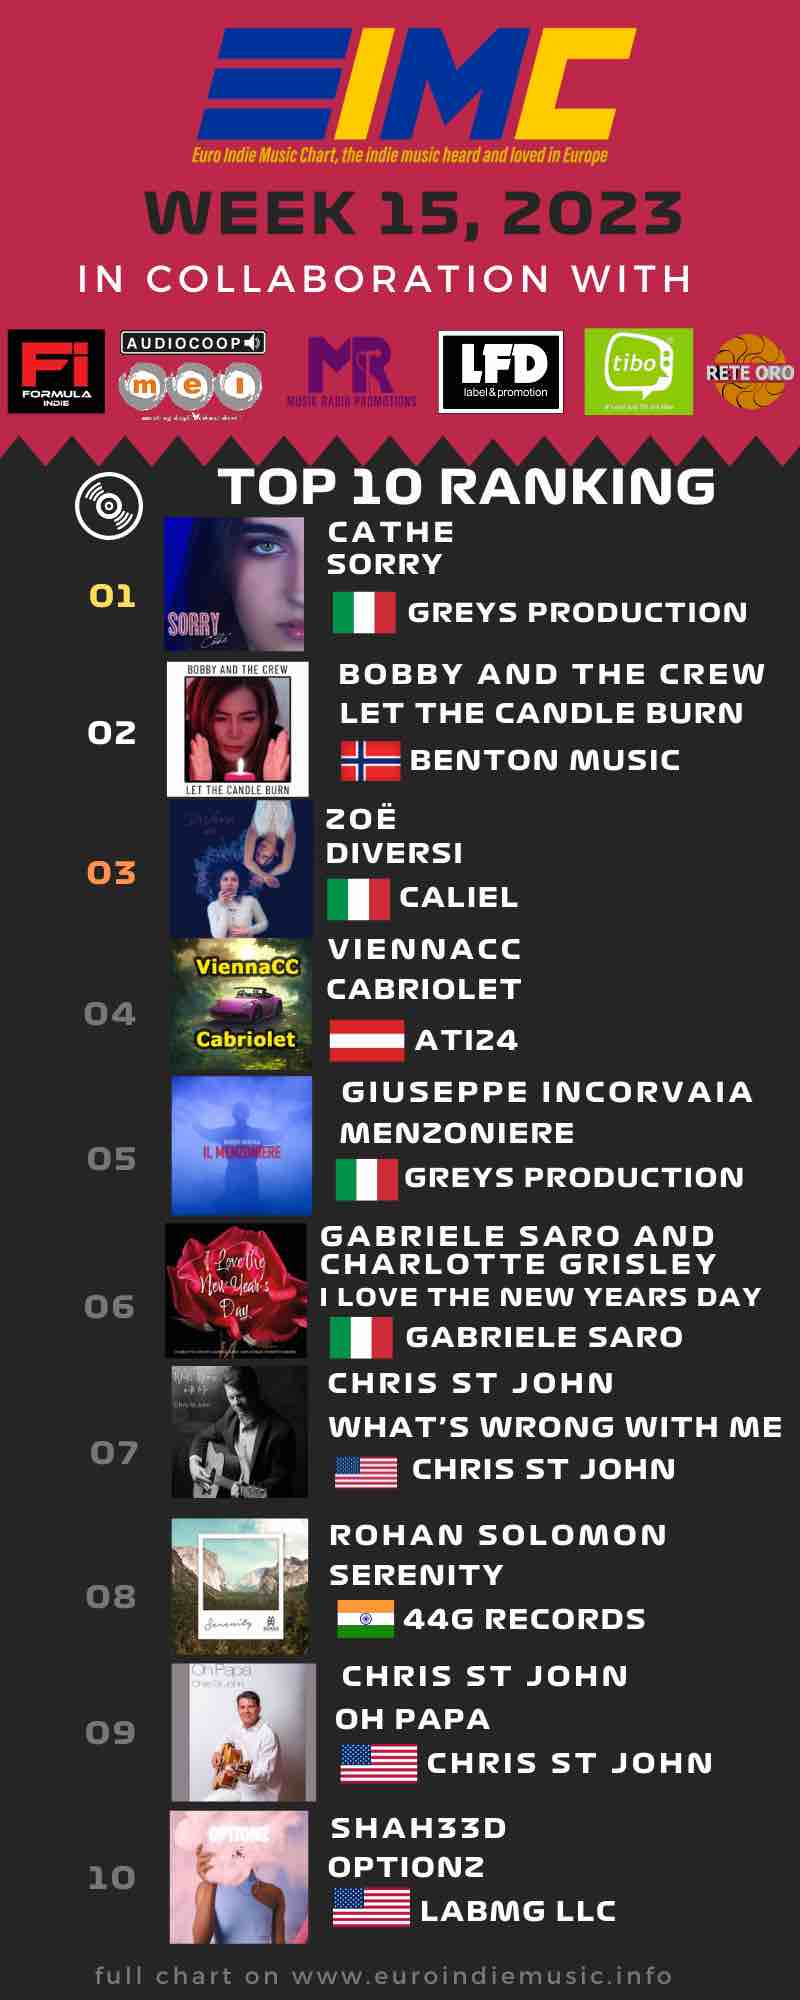 Nuova Euro Indie Music Chart: in testa Cathe